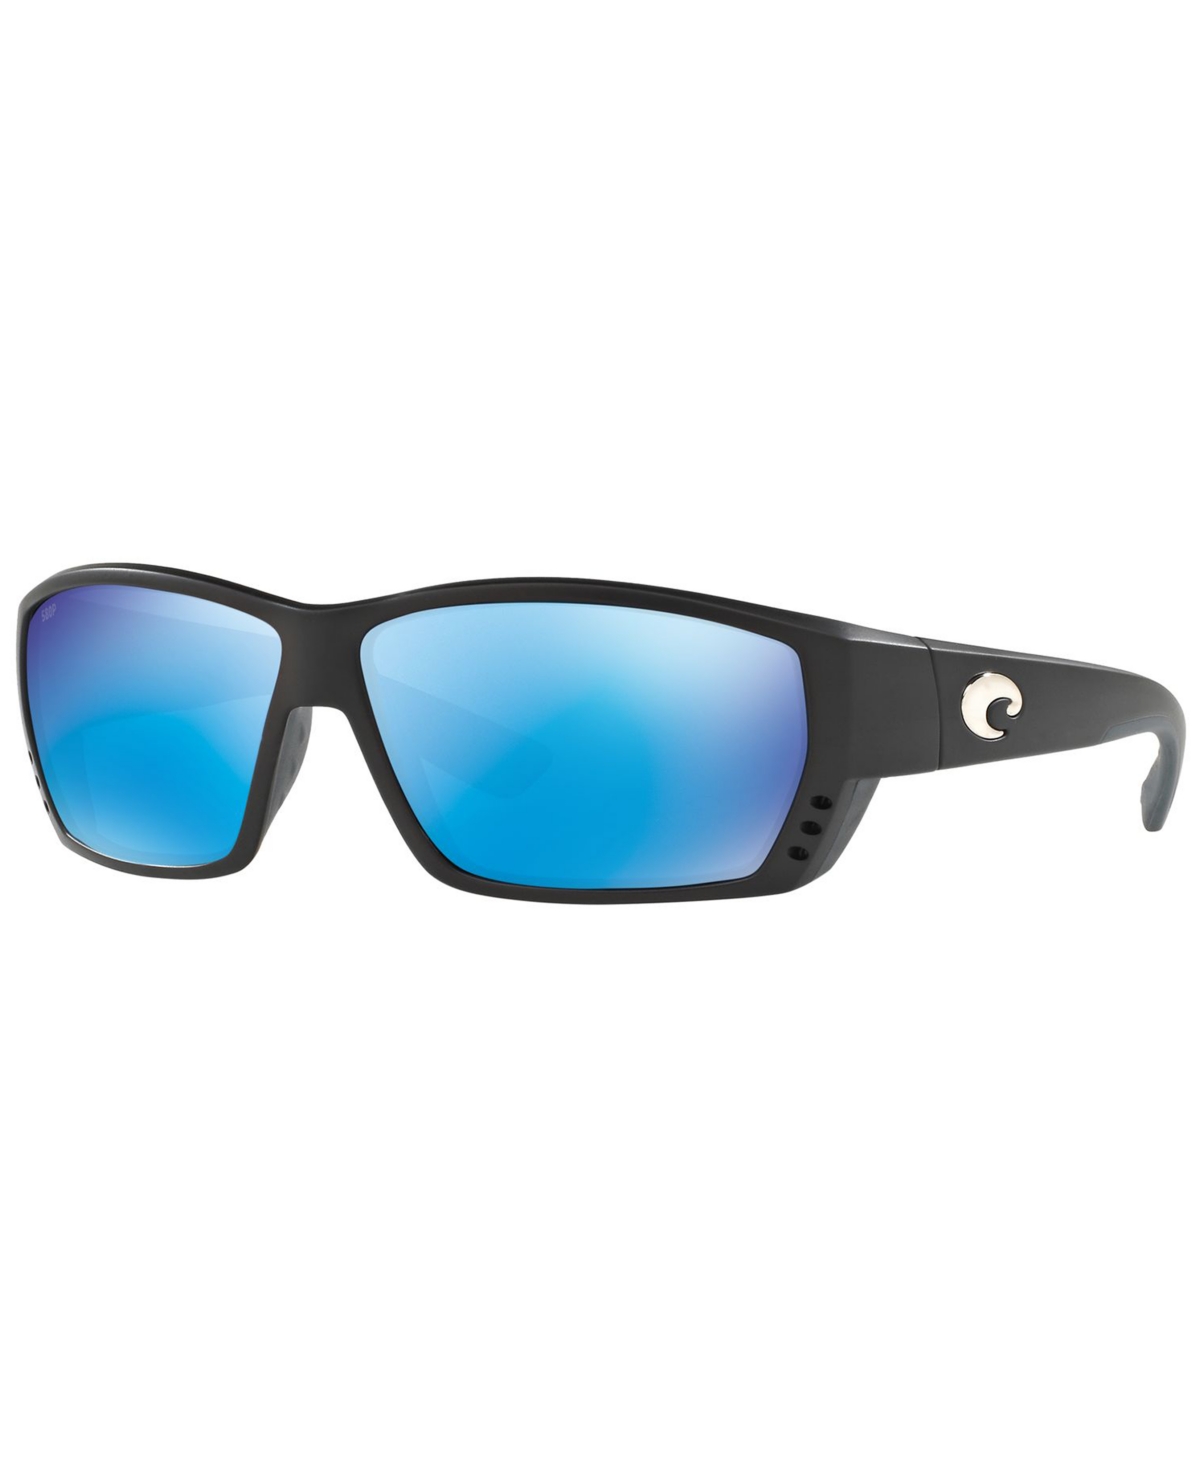 Men's Polarized Sunglasses, Tuna Alley - BLACK/ BLUE MIRROR POLAR